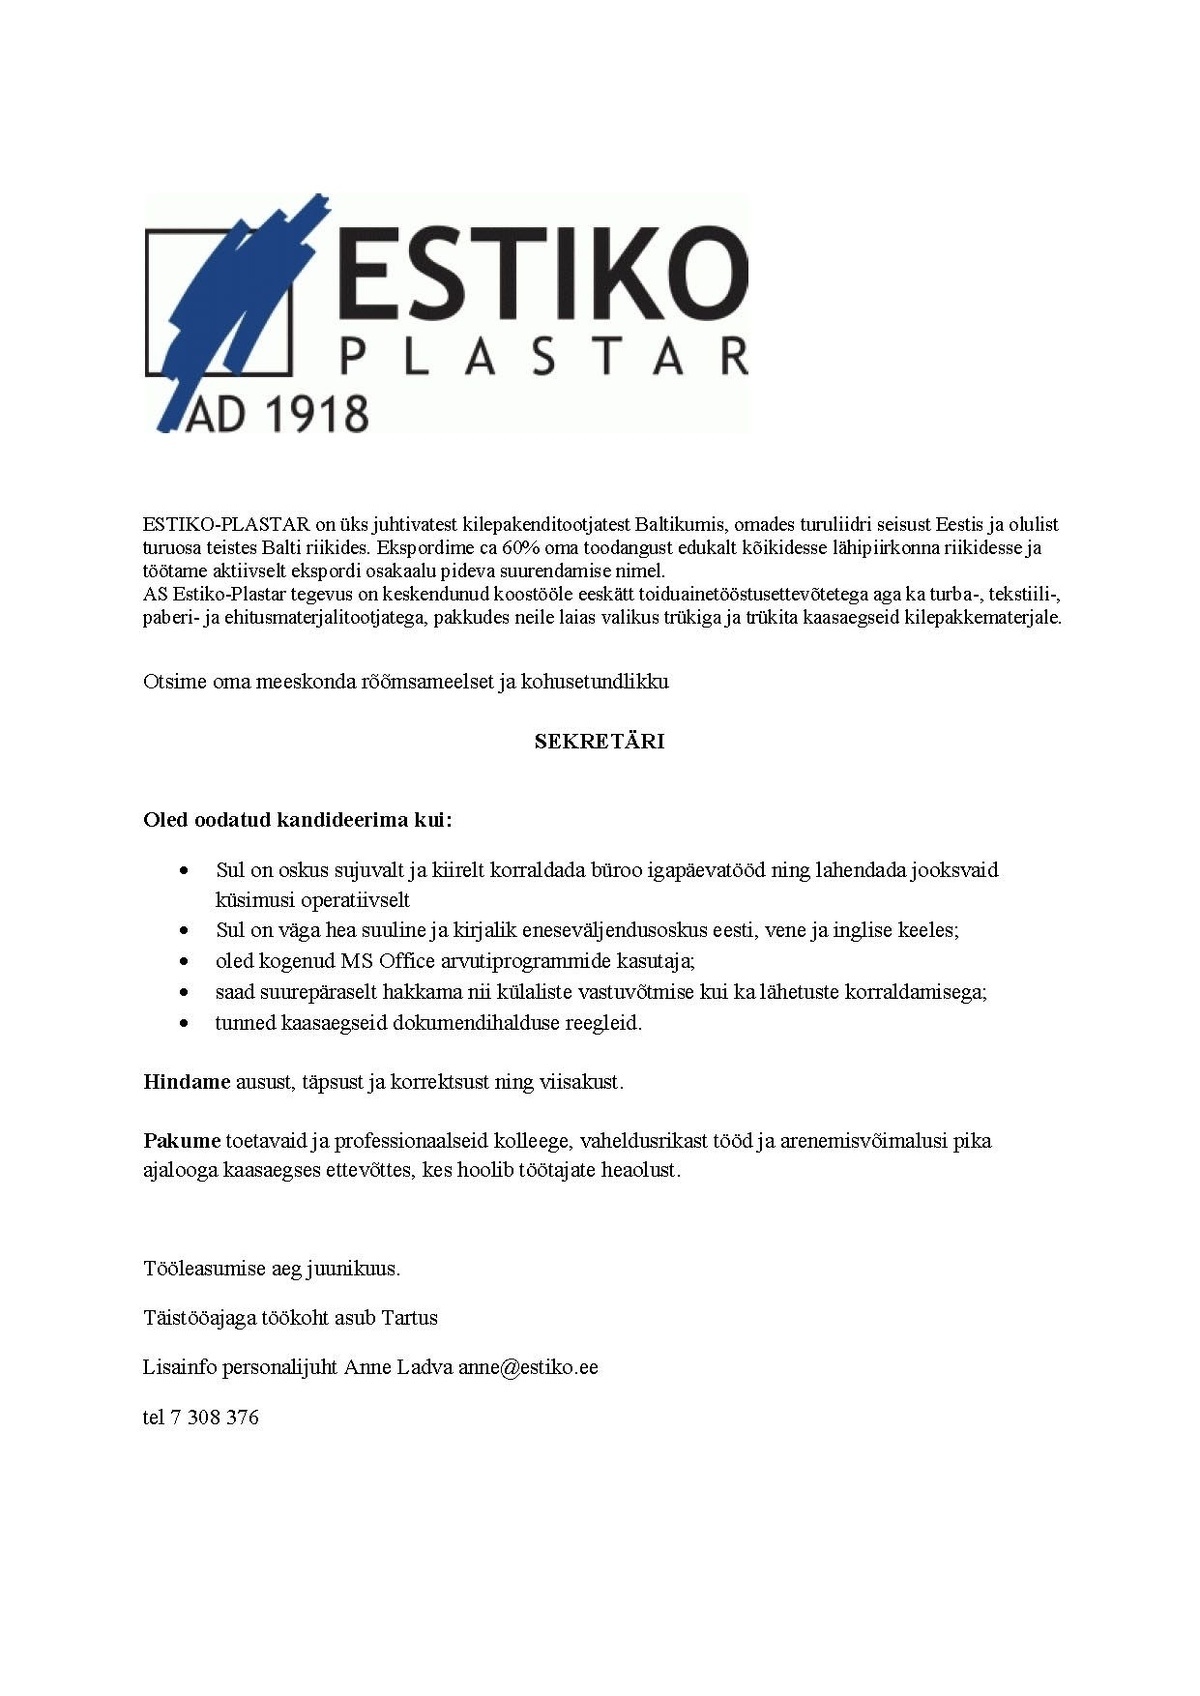 Estiko-Plastar Sekretär